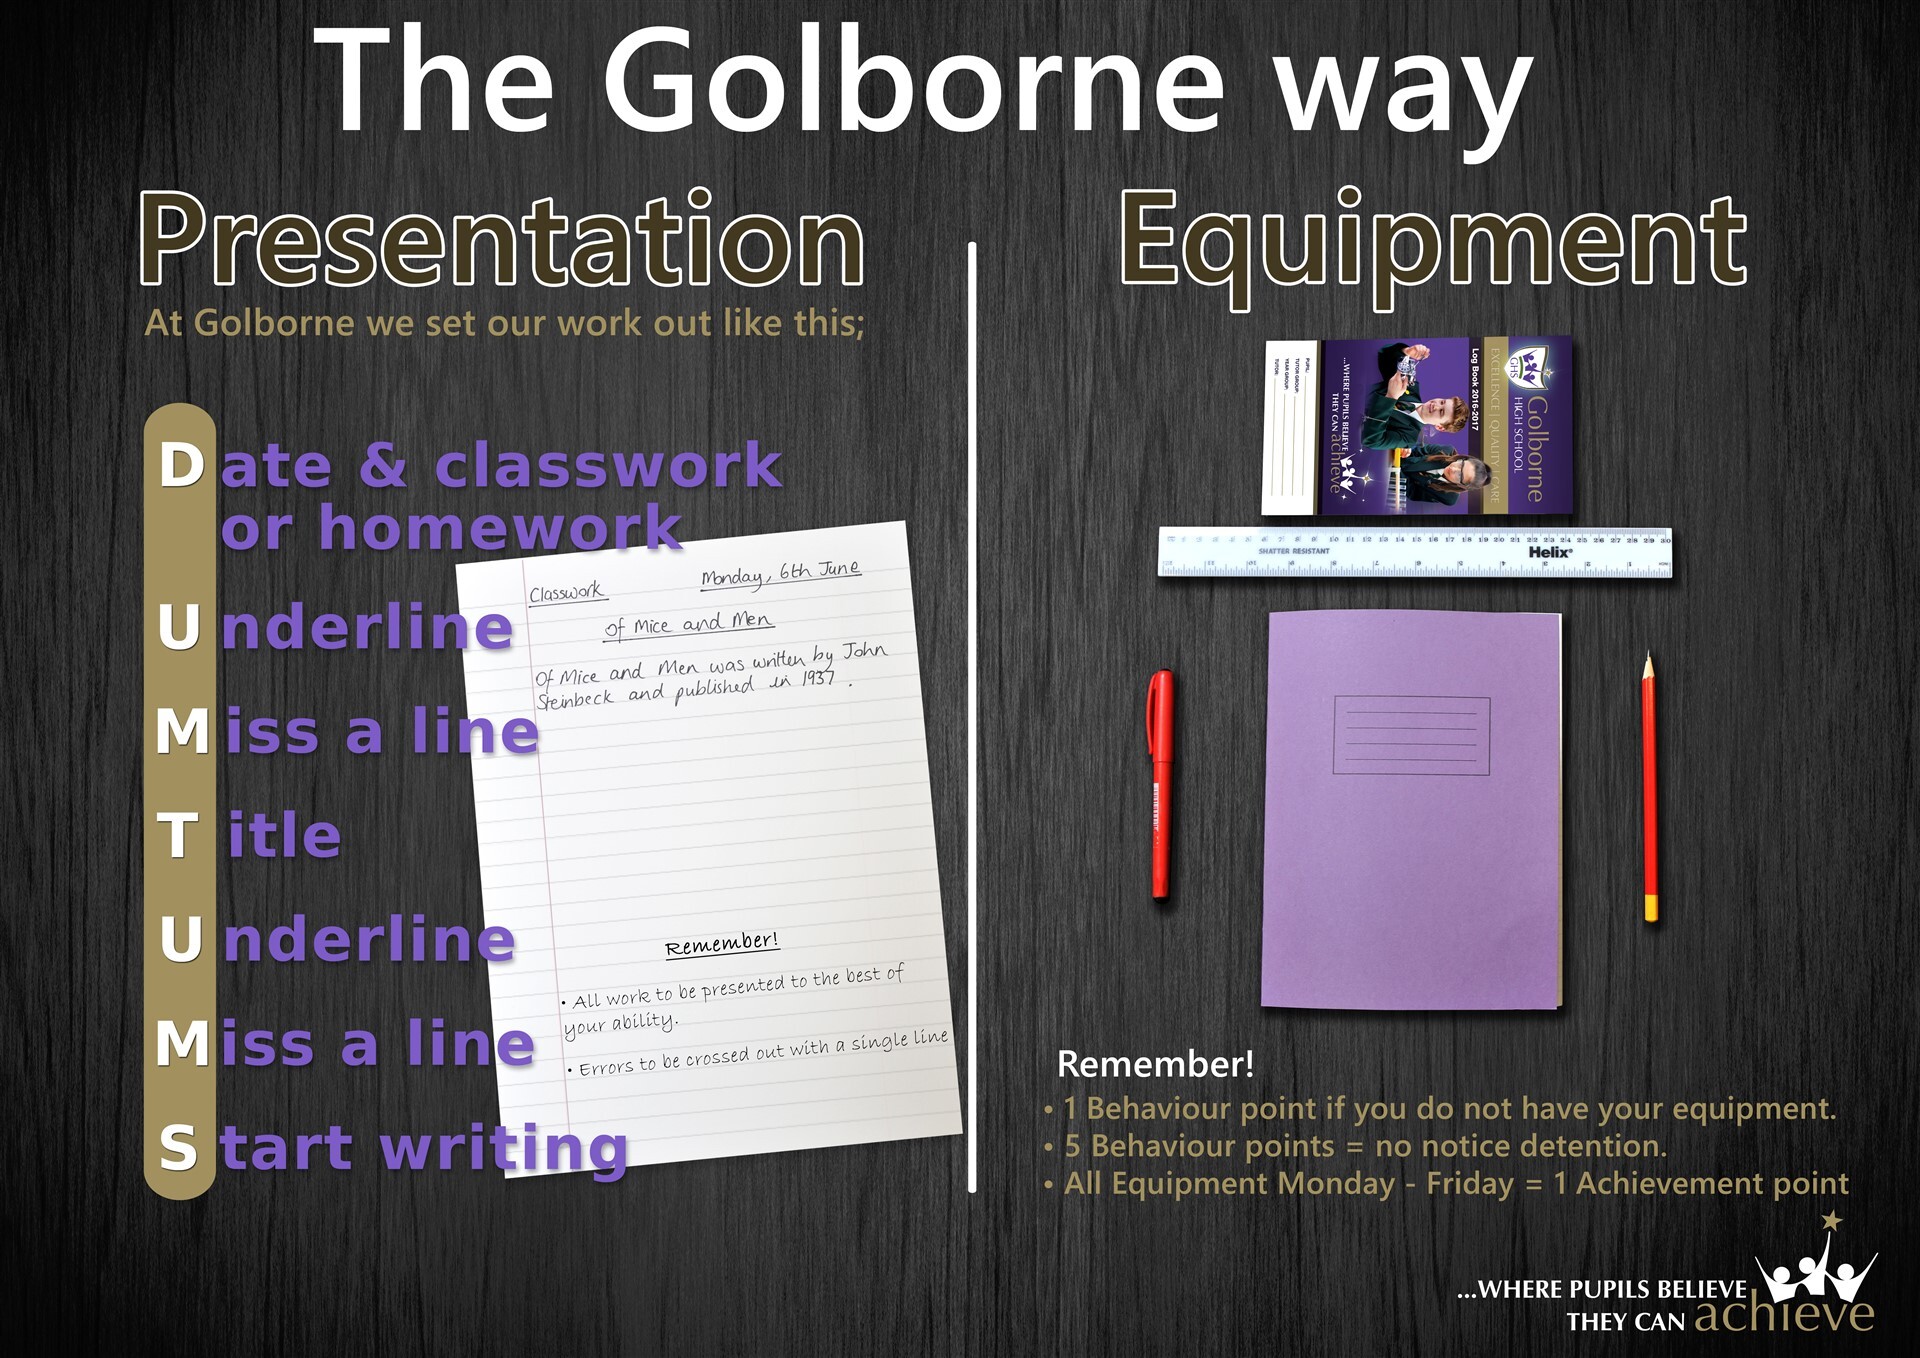 Presentation and Equipment